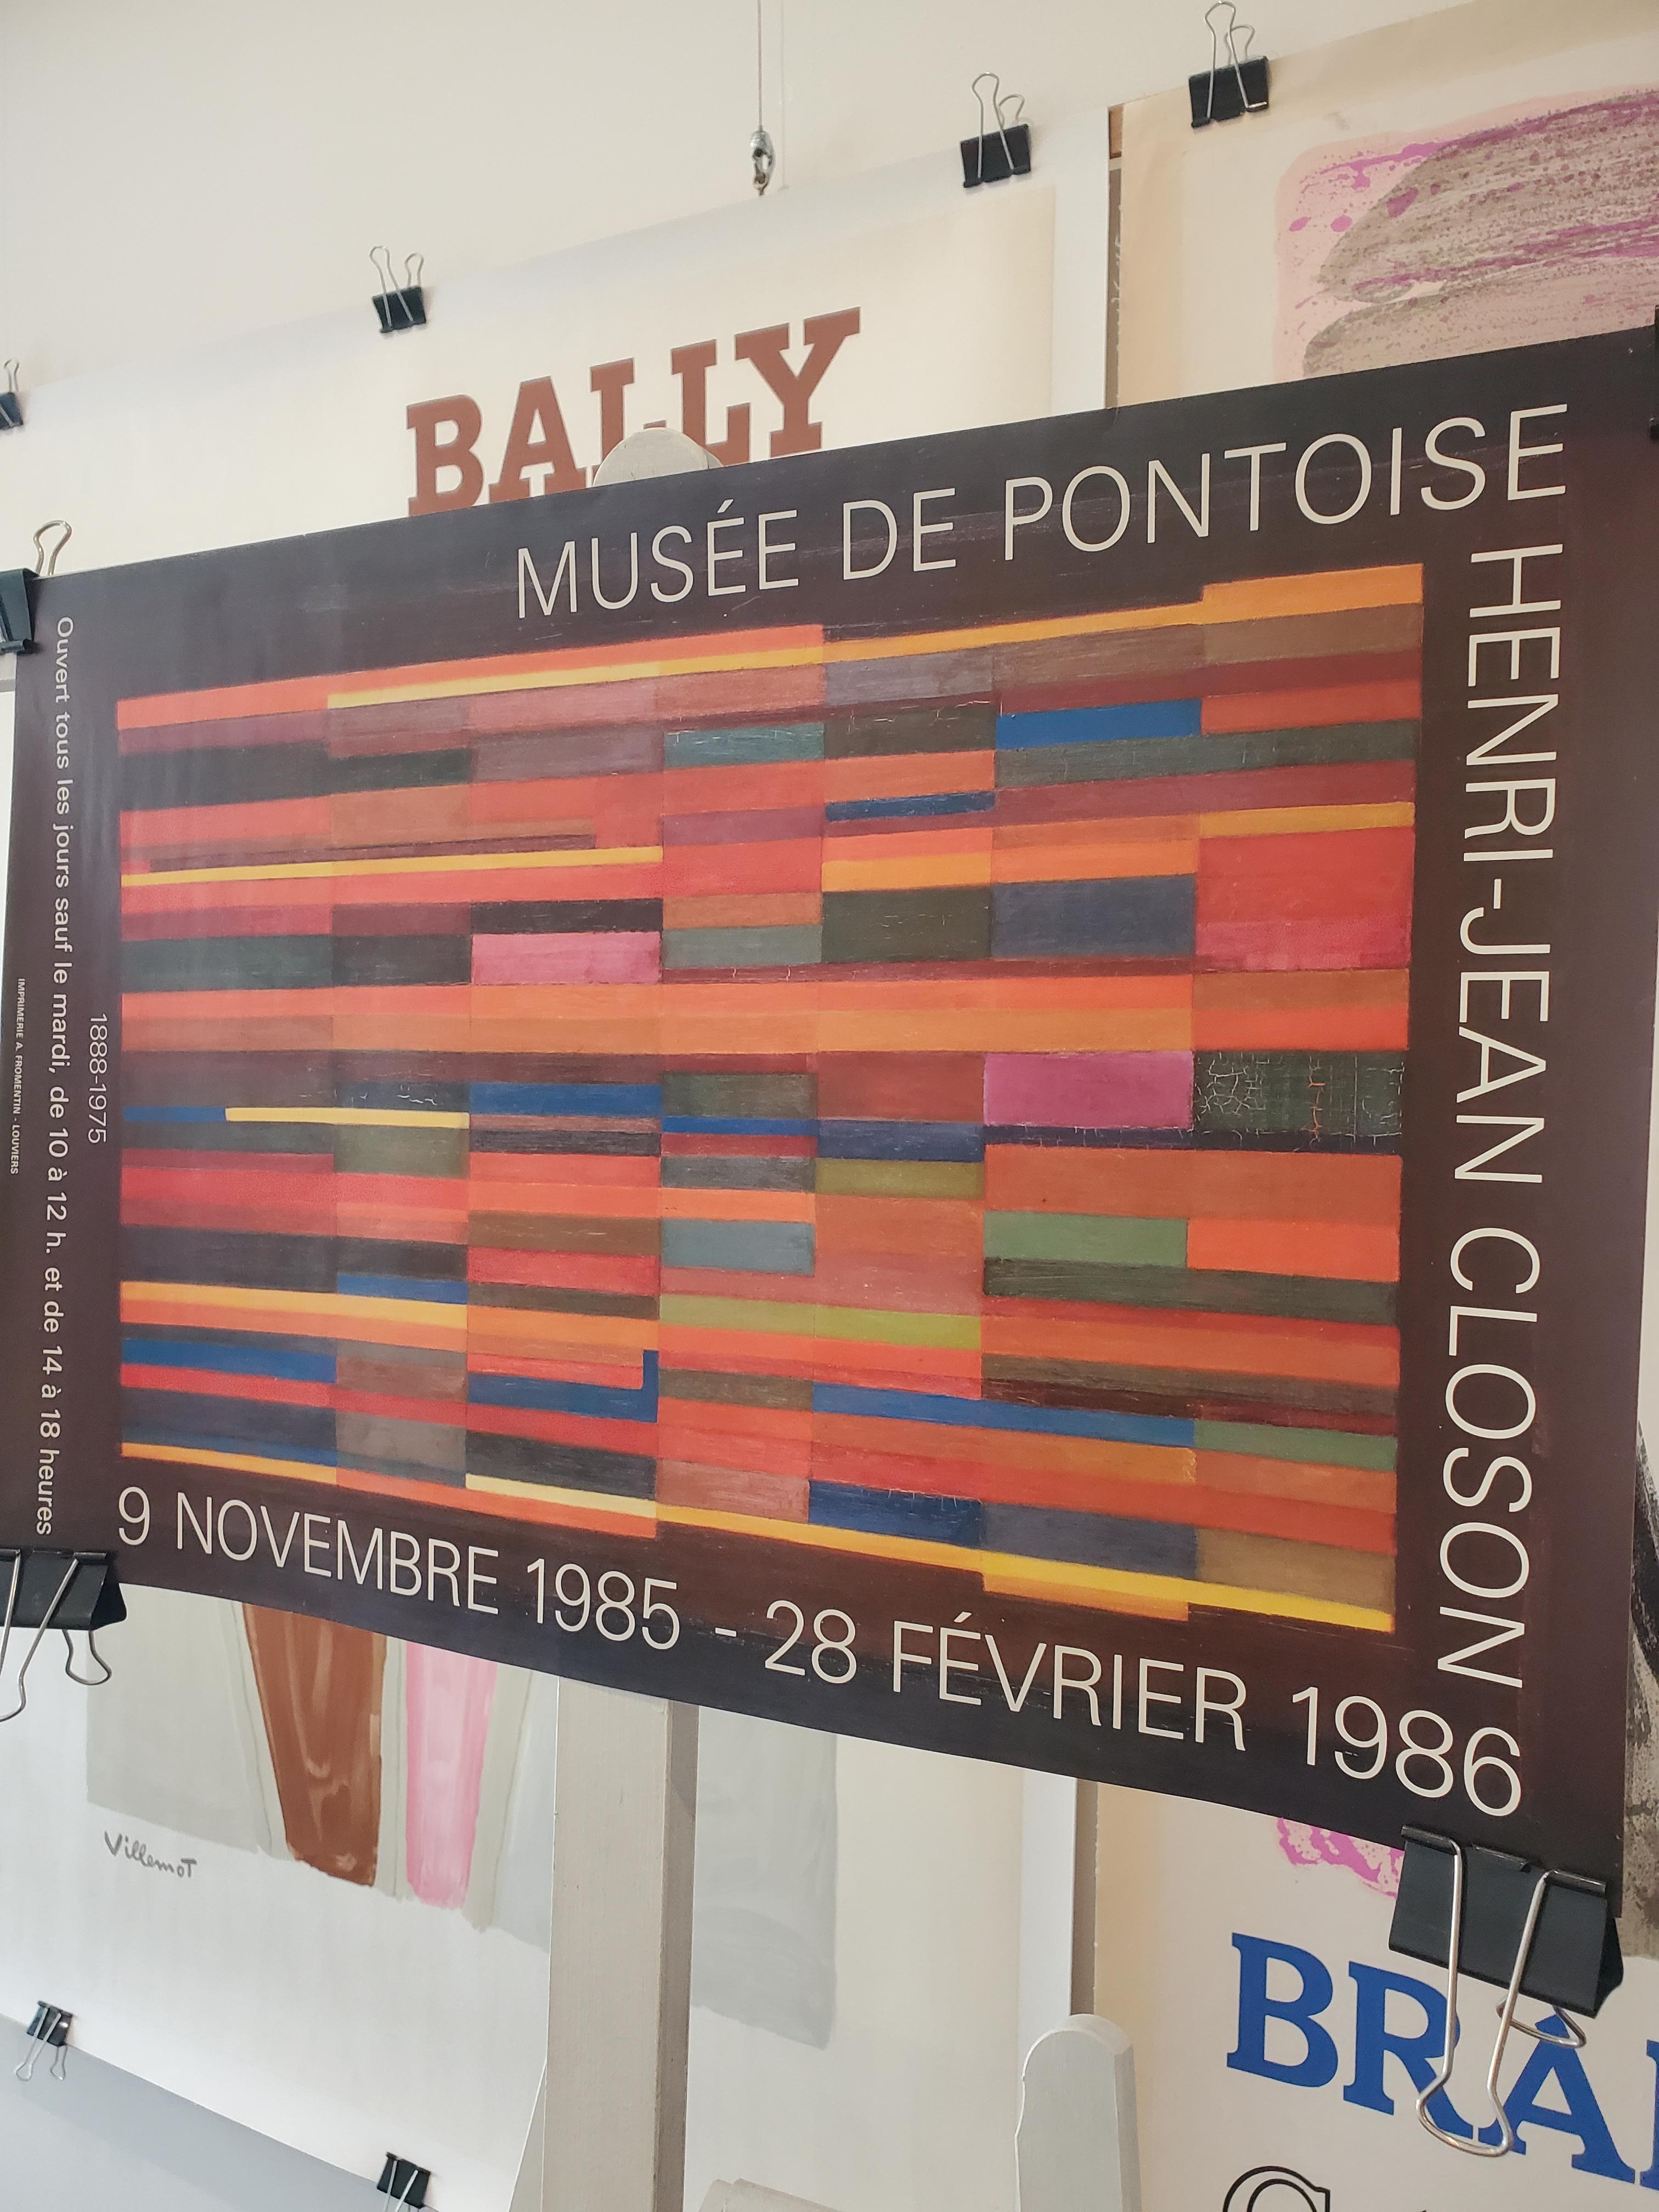 Original vintage exhibition Poster, 'Musee De Pontoise' Henri-Jean Closon 1986

